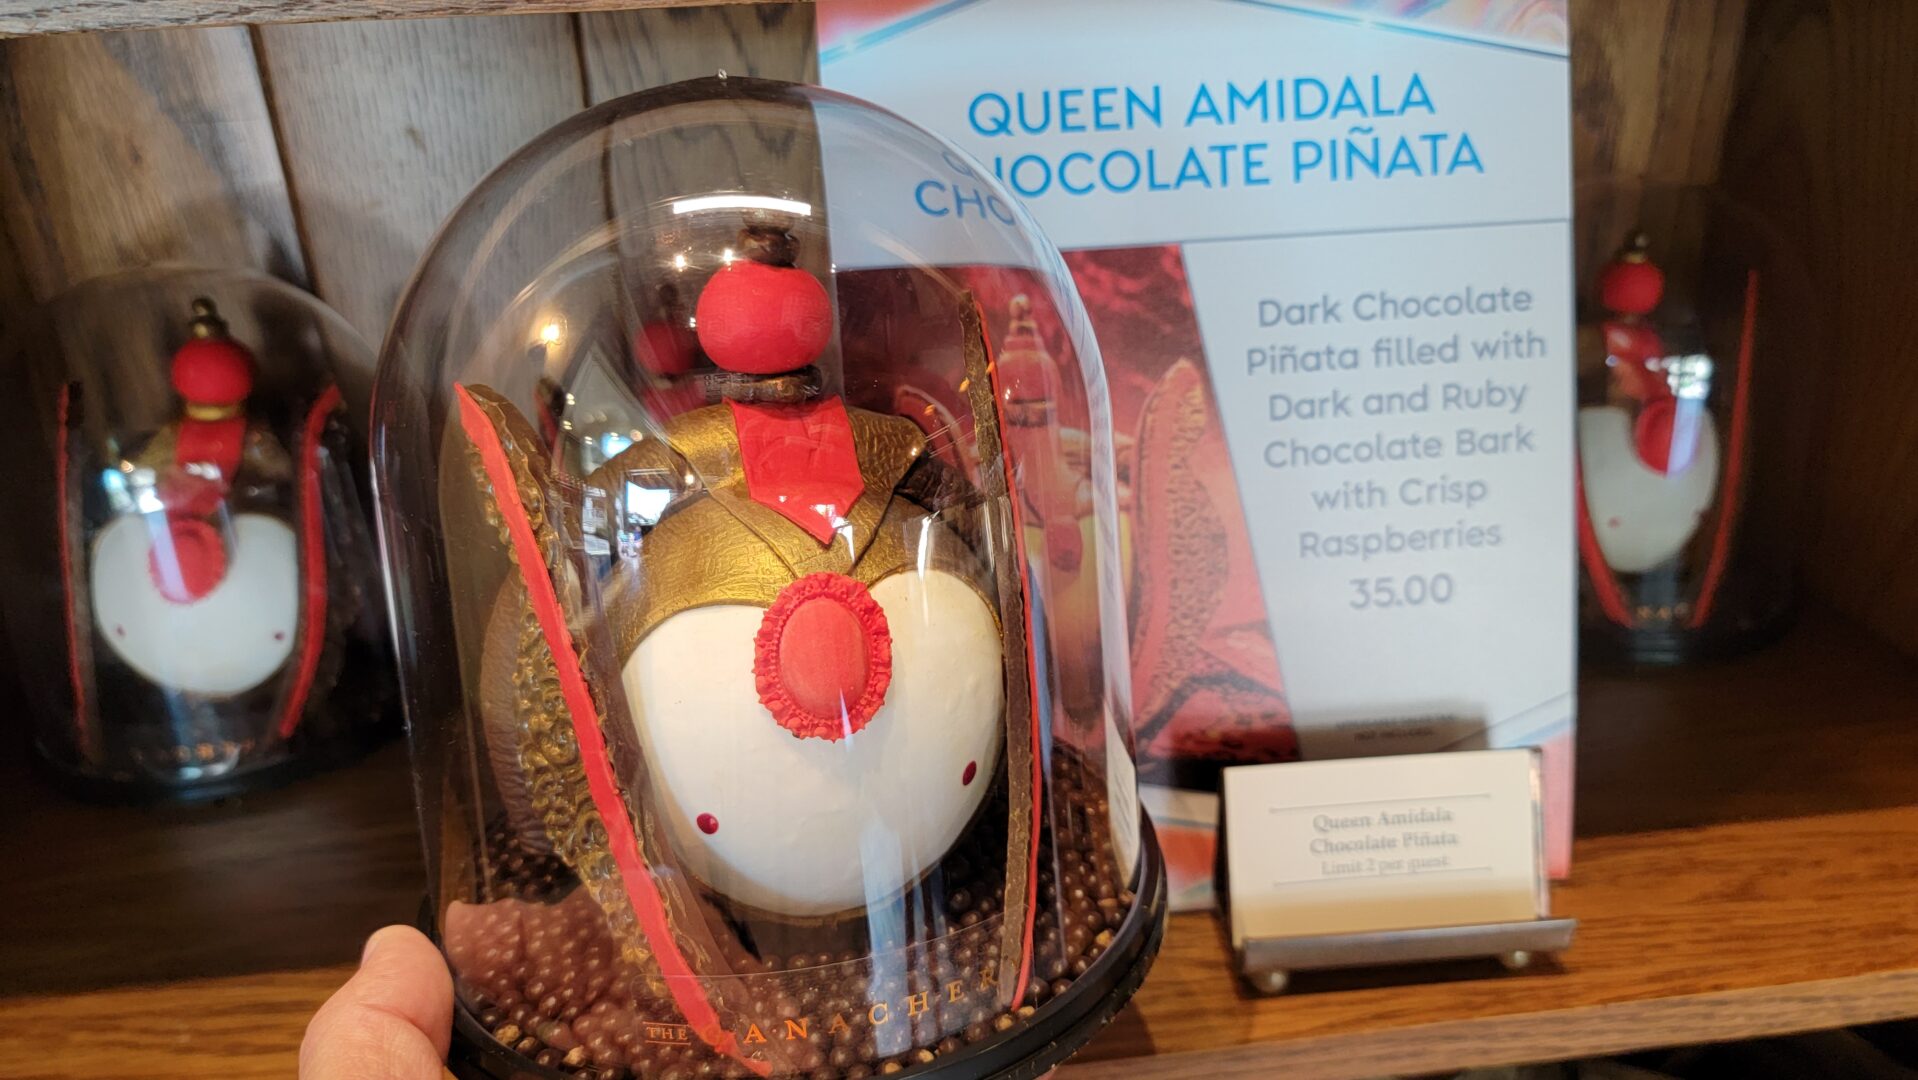 Queen Amidala Chocolate Pinata at the Ganachery in Disney Springs